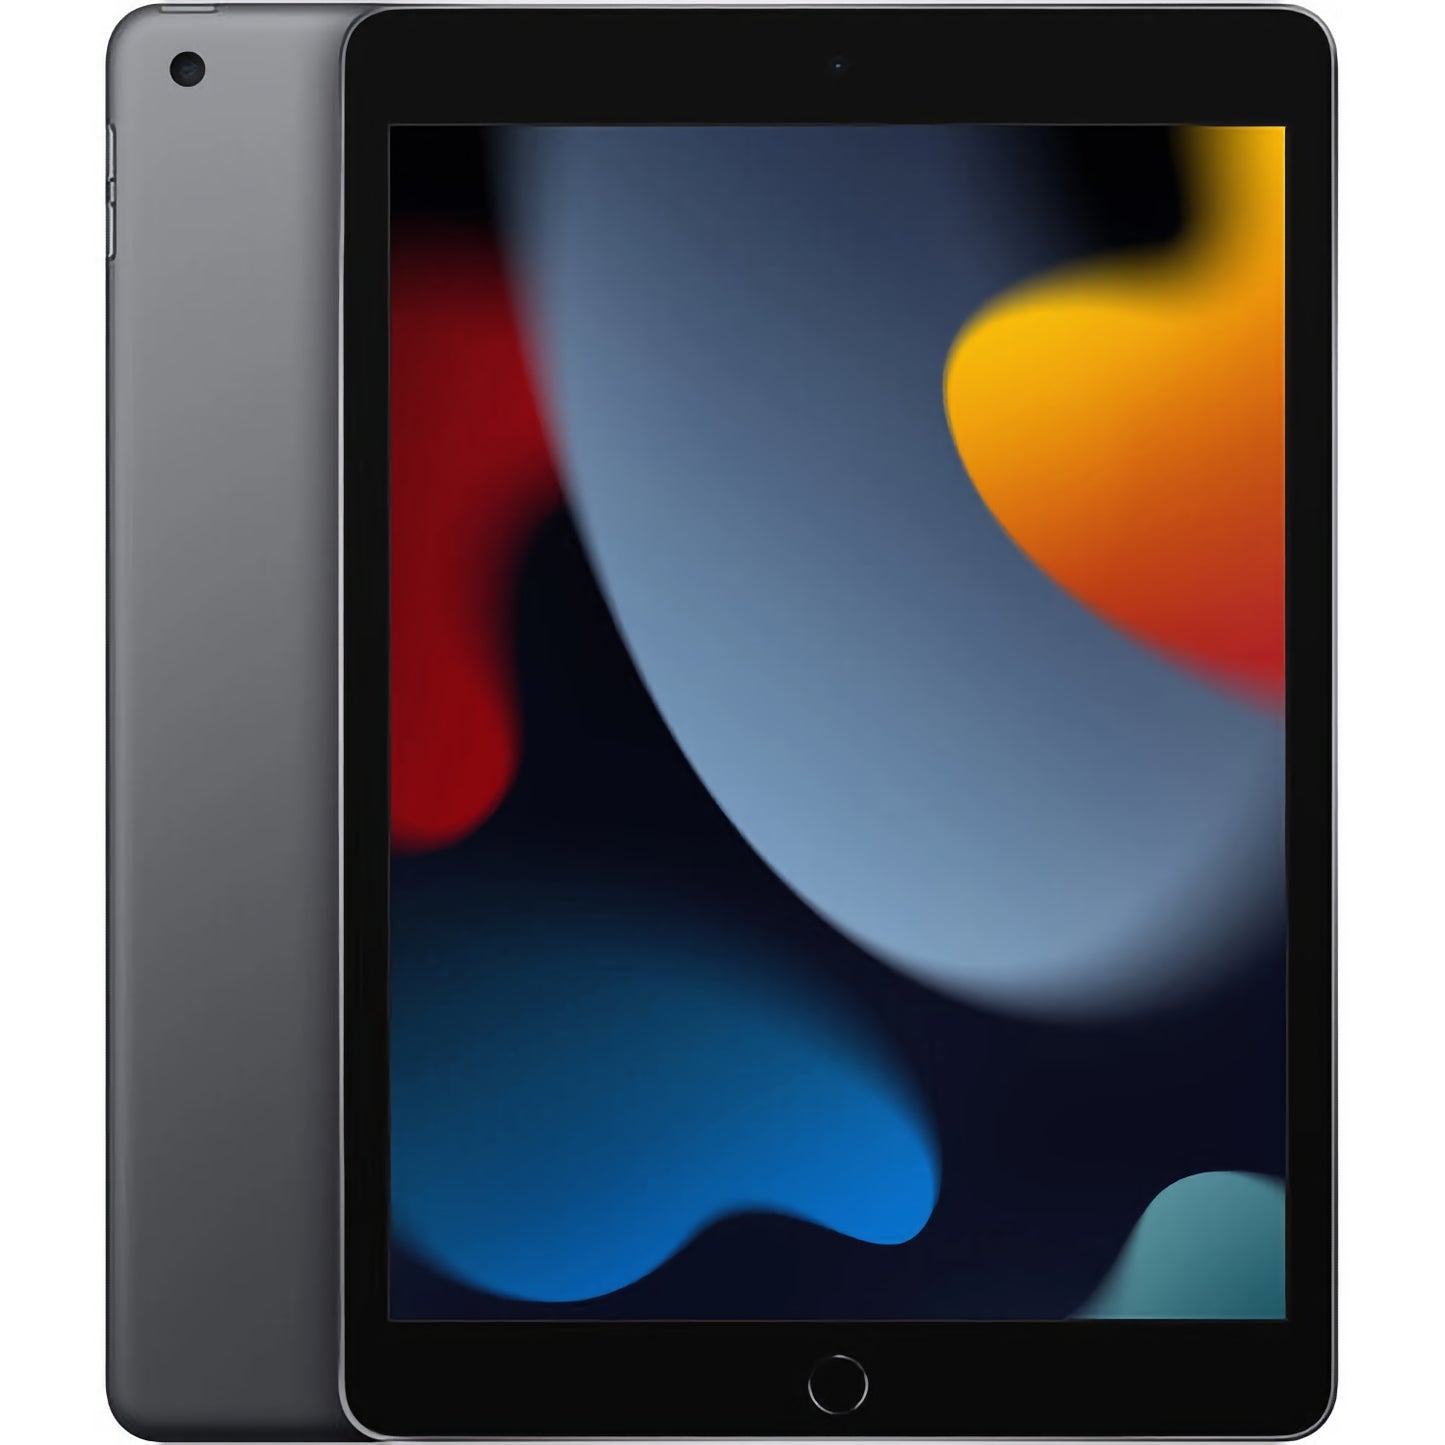 Apple iPad (10.2-inch, Wi-Fi, 64GB) – Space Gray (Latest Model) - Maxandfix